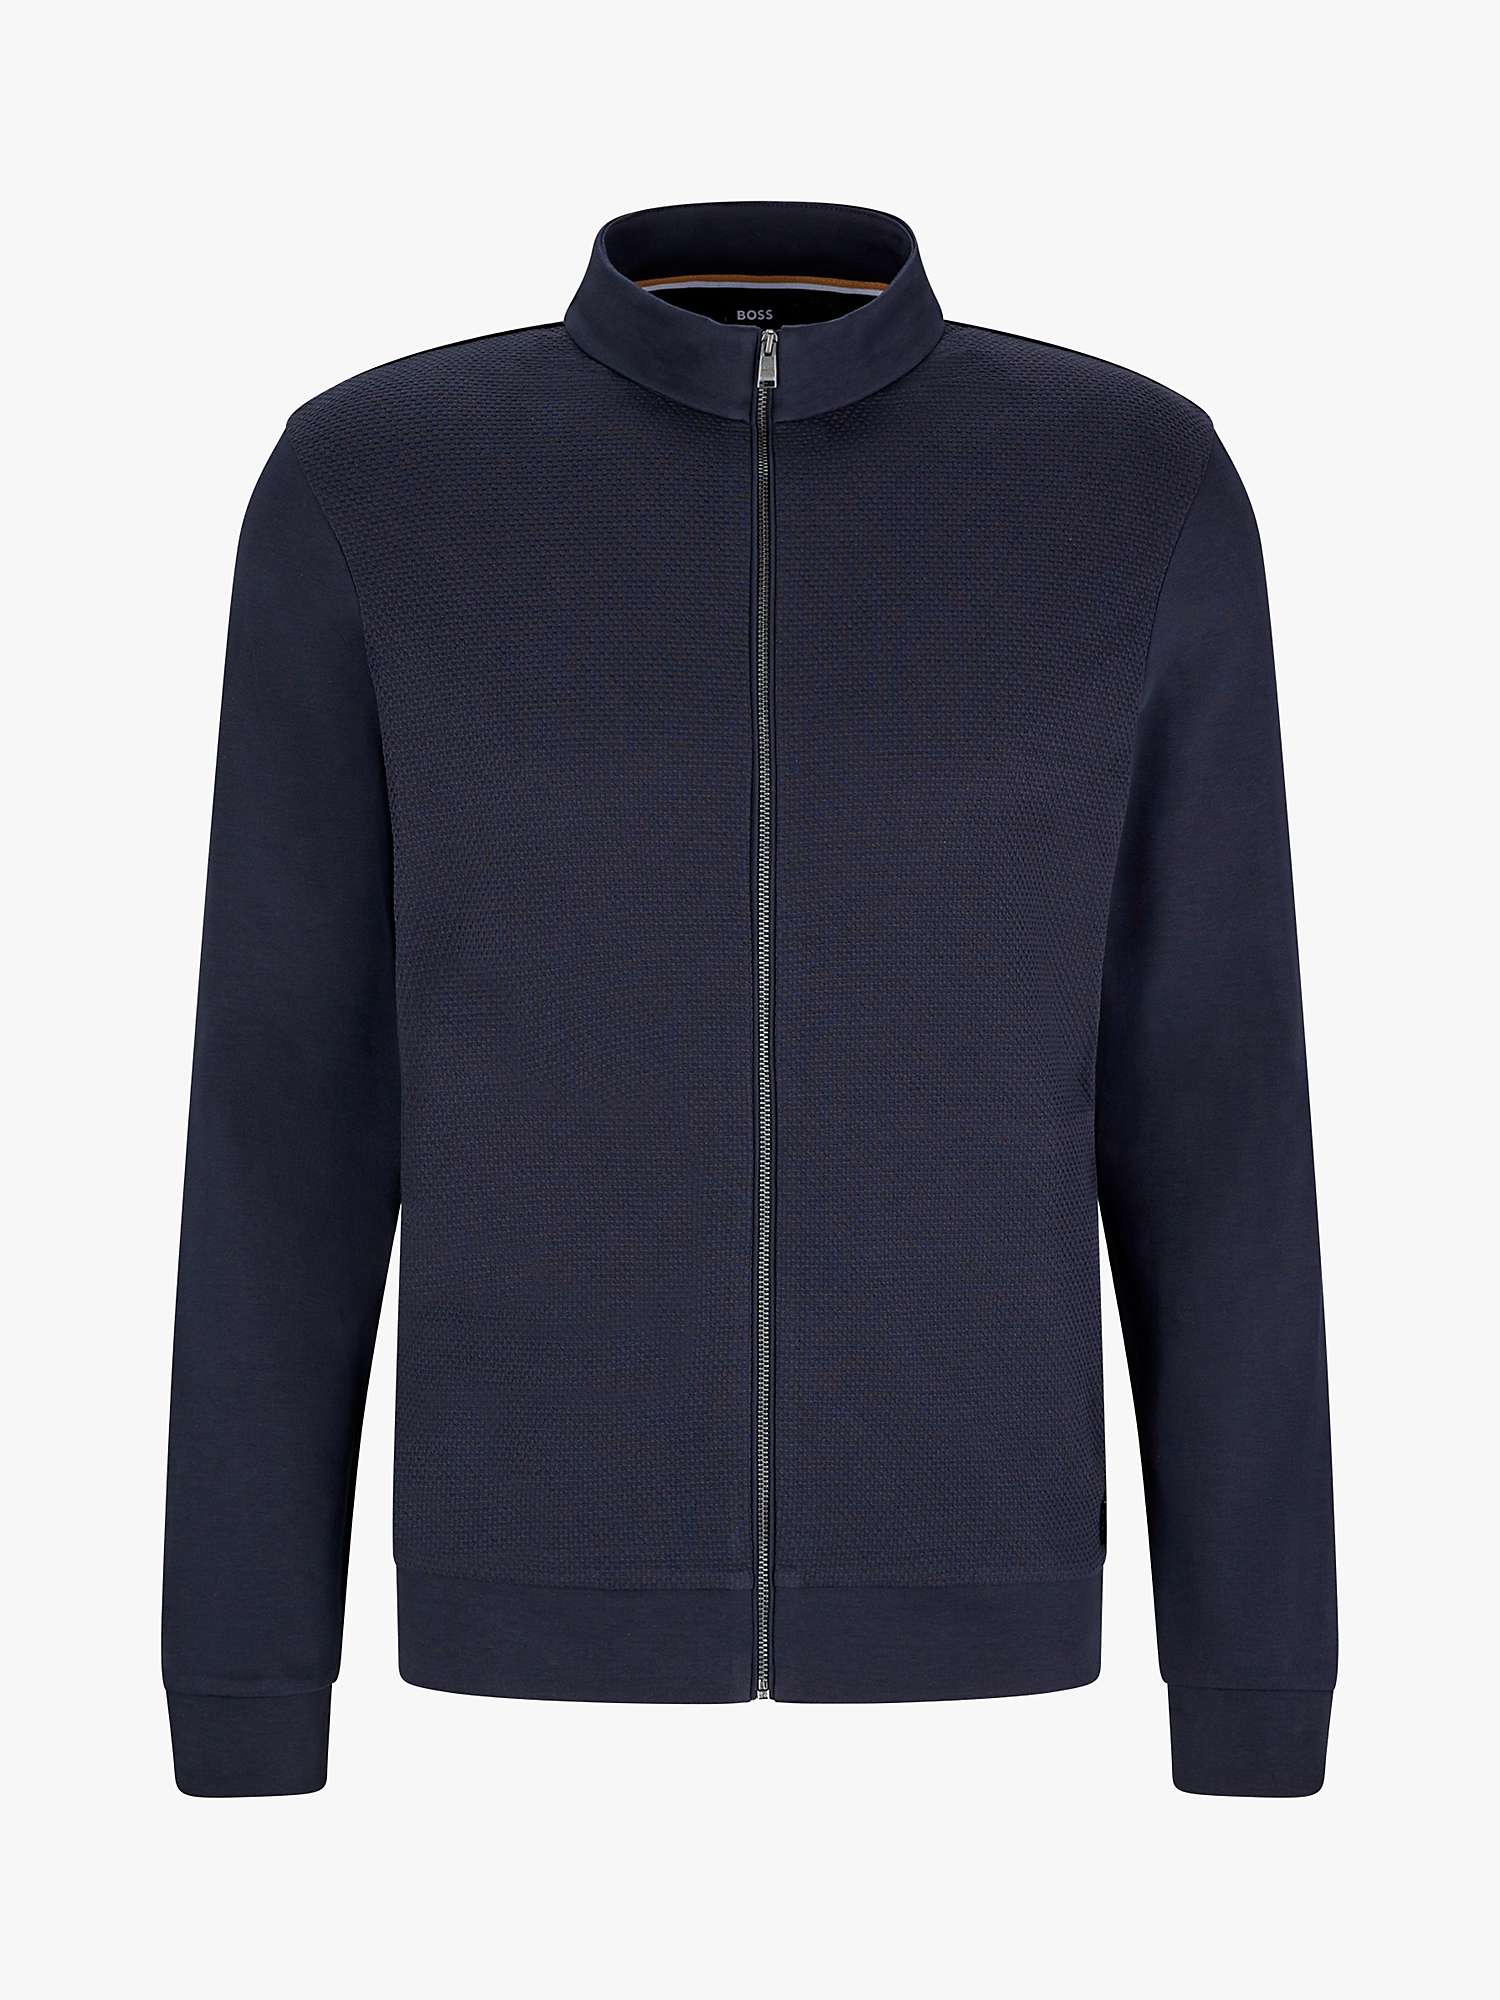 Buy BOSS Skiles Zip Through Sweatshirt, Dark Blue Online at johnlewis.com